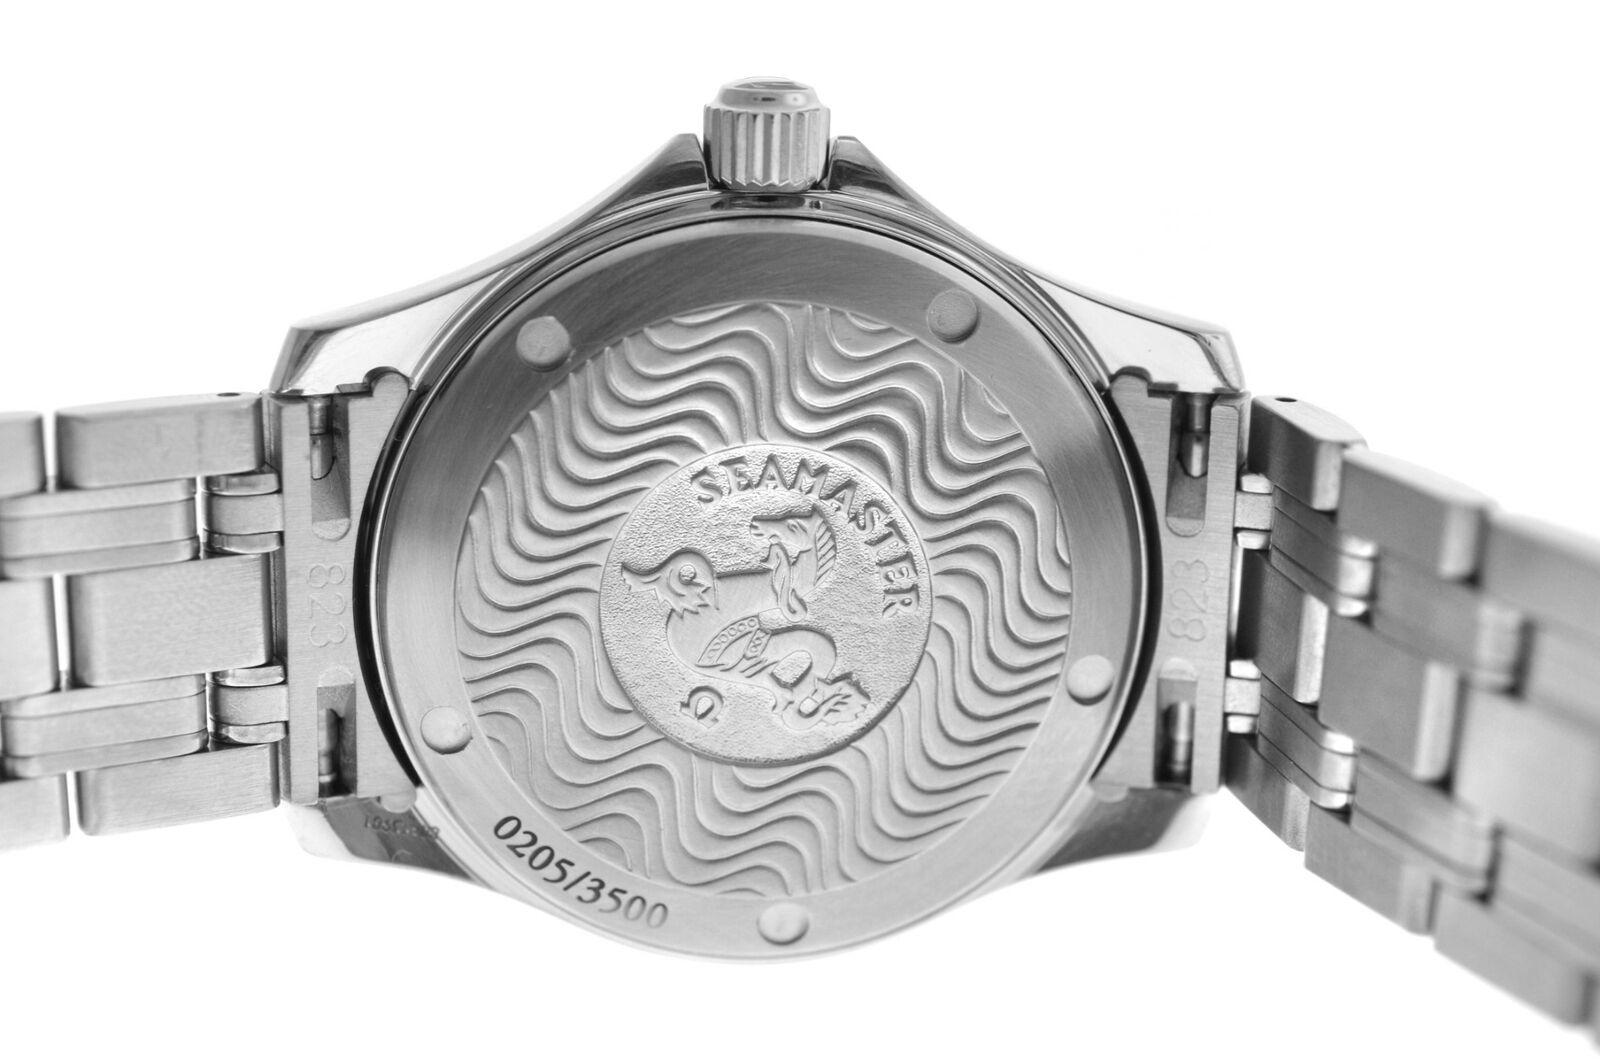 Omega Seamaster Jacques Mayol 2002 Limitierte Auflage 2508.80 Chronometer-Uhr im Zustand „Hervorragend“ im Angebot in New York, NY